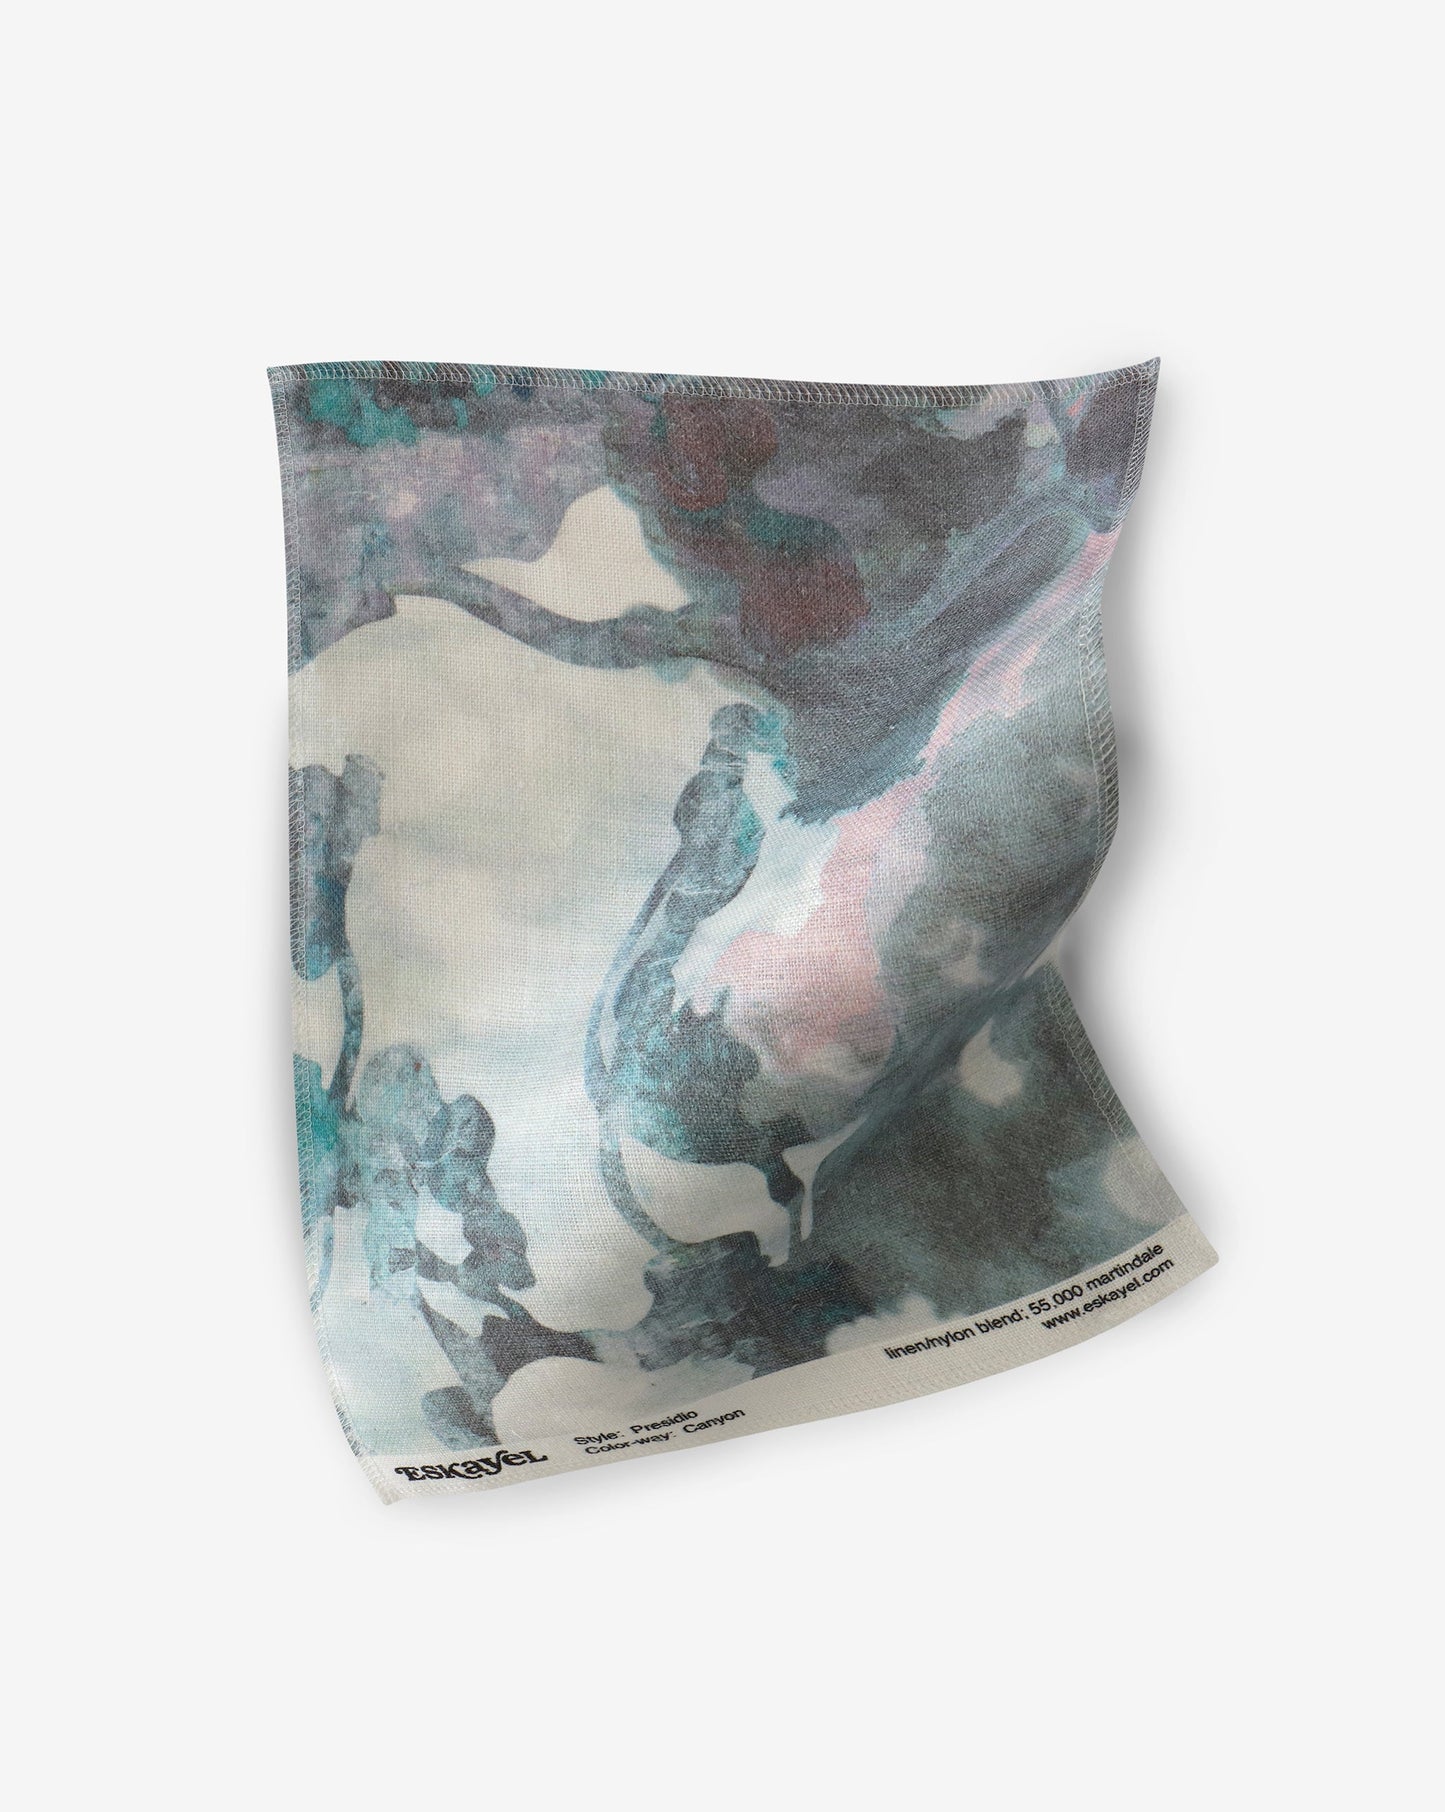 A bandana made of Presidio Fabric||Canyon with a blue, pink, and purple design.